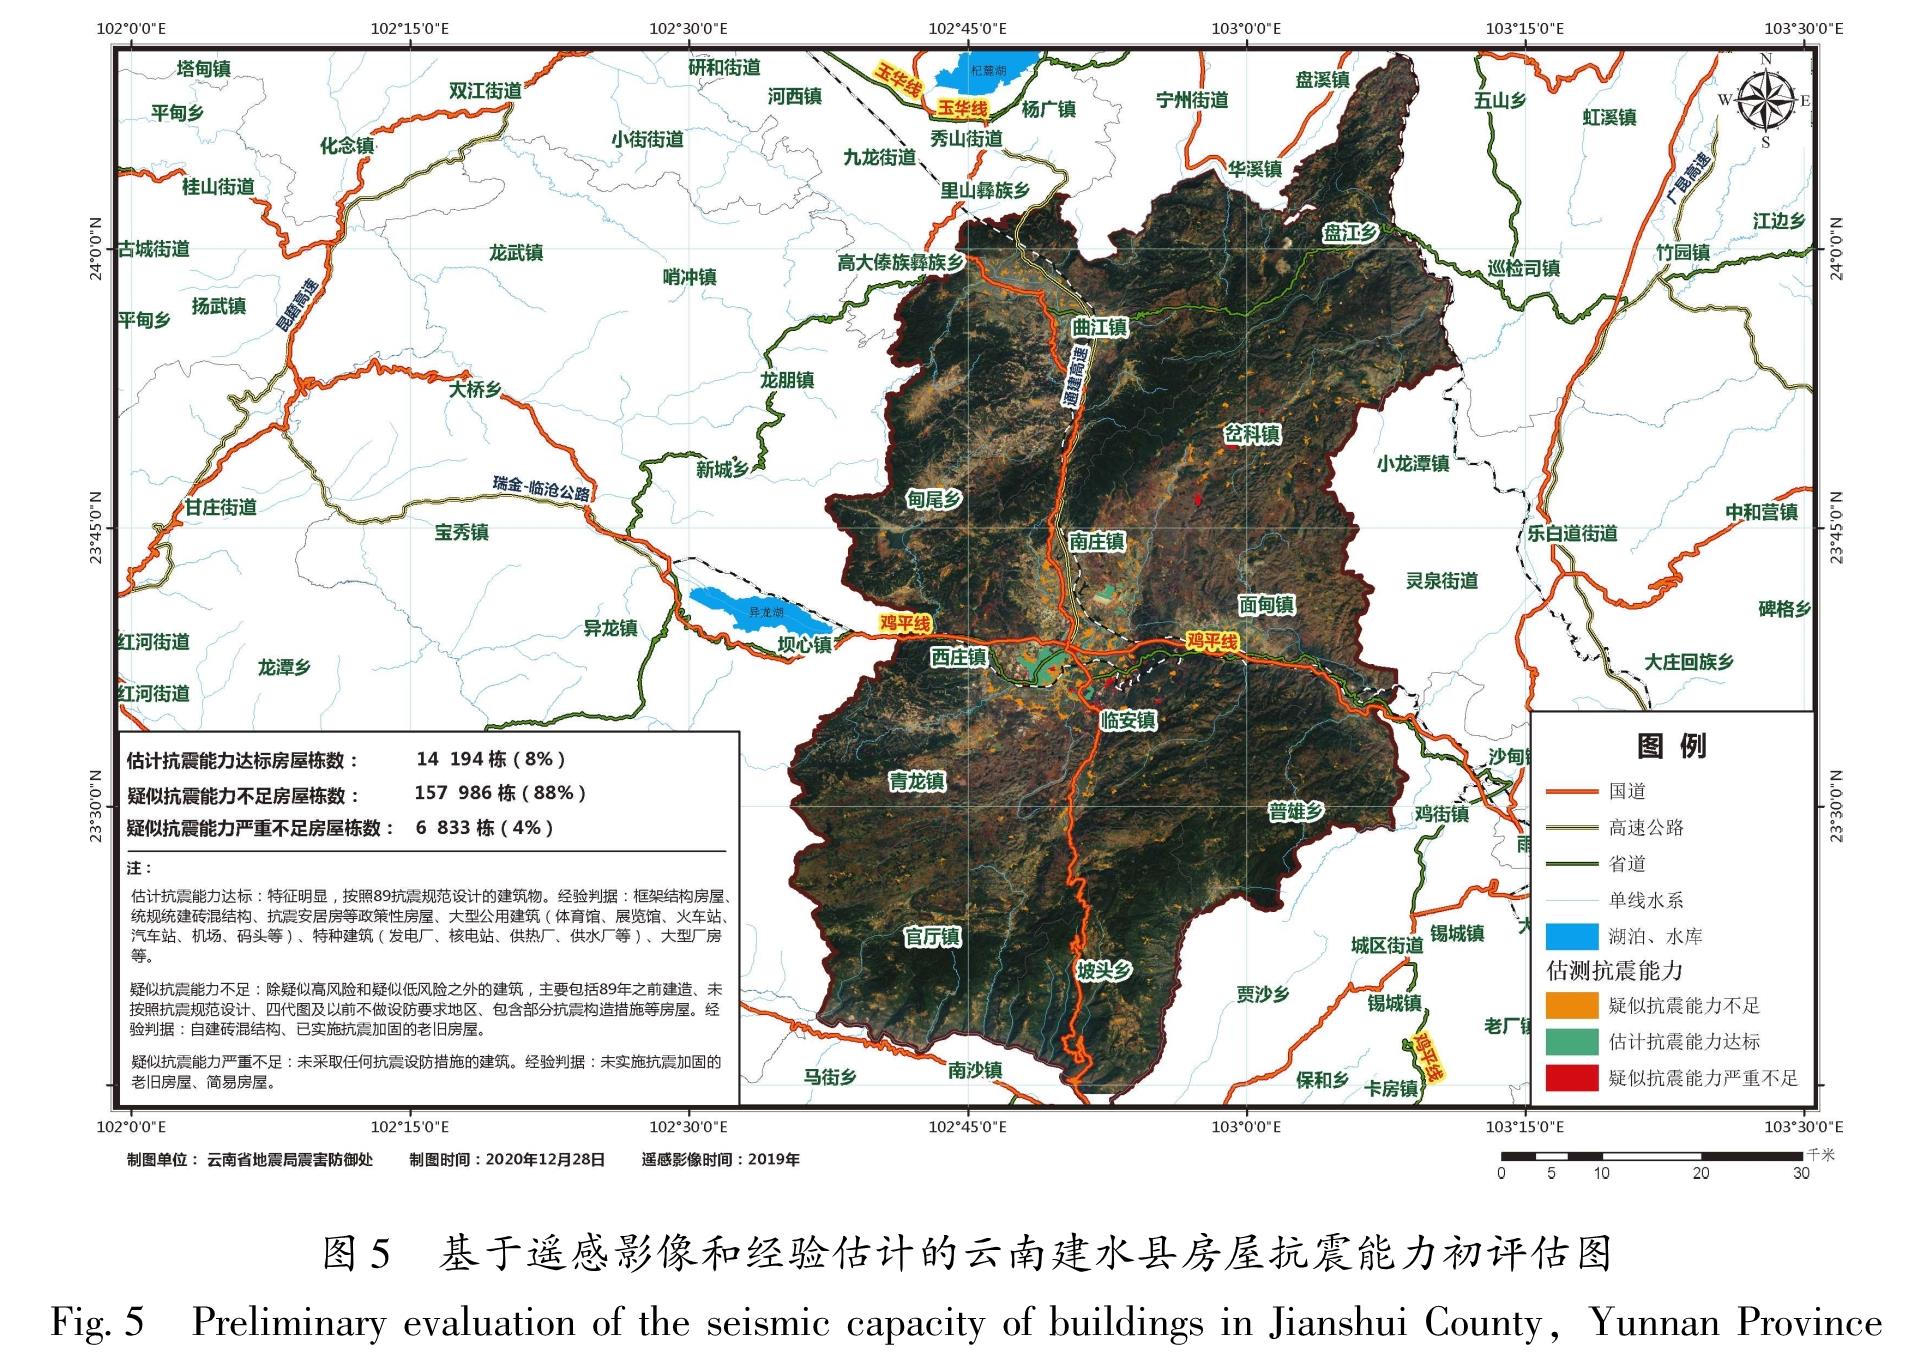 图5 基于遥感影像和经验估计的云南建水县房屋抗震能力初评估图<br/>Fig.5 Preliminary evaluation of the seismic capacity of buildings in Jianshui County,Yunnan Province